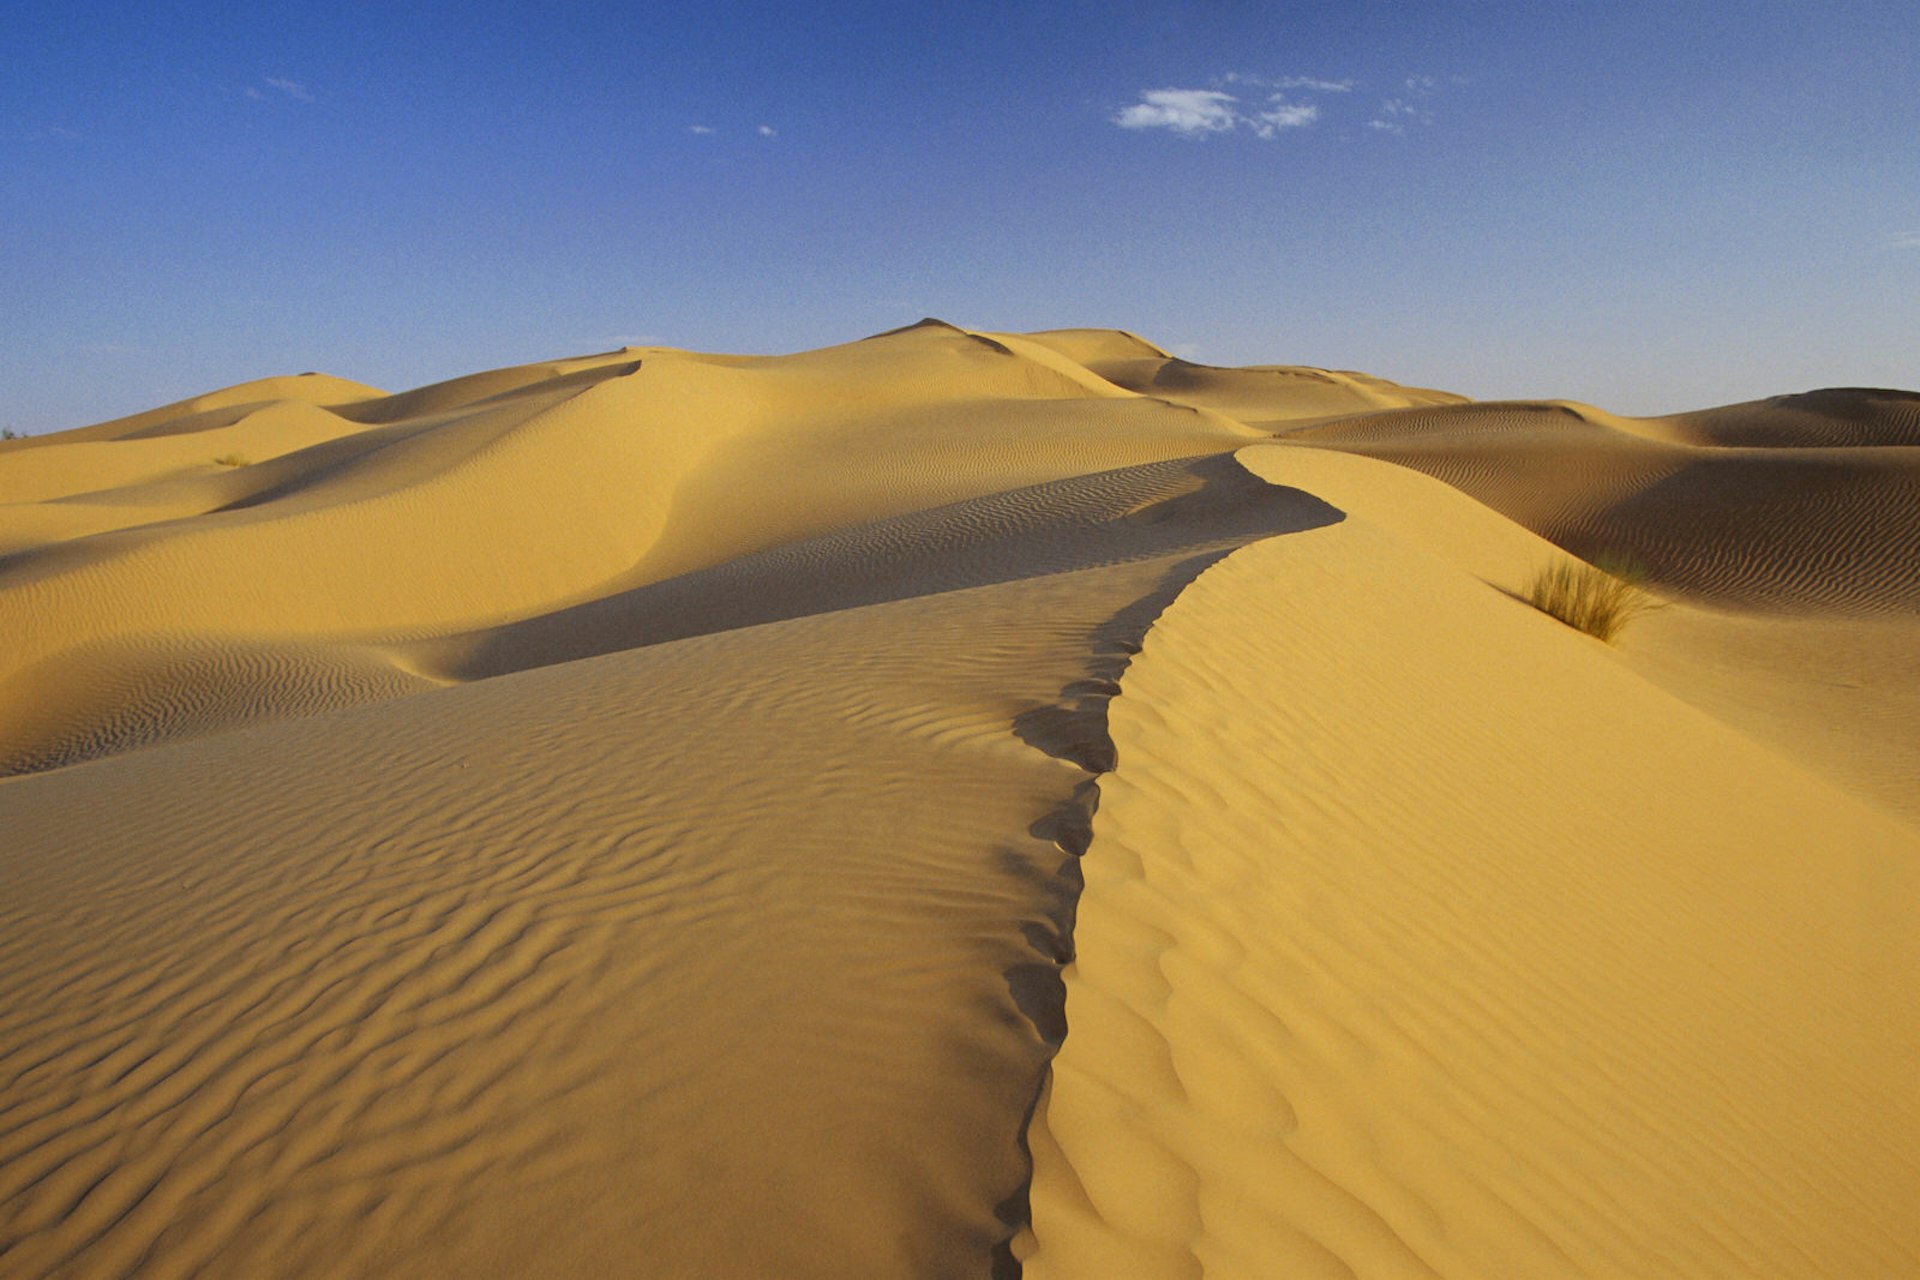 Endless sand dunes in the Sahara desert, Tunisia